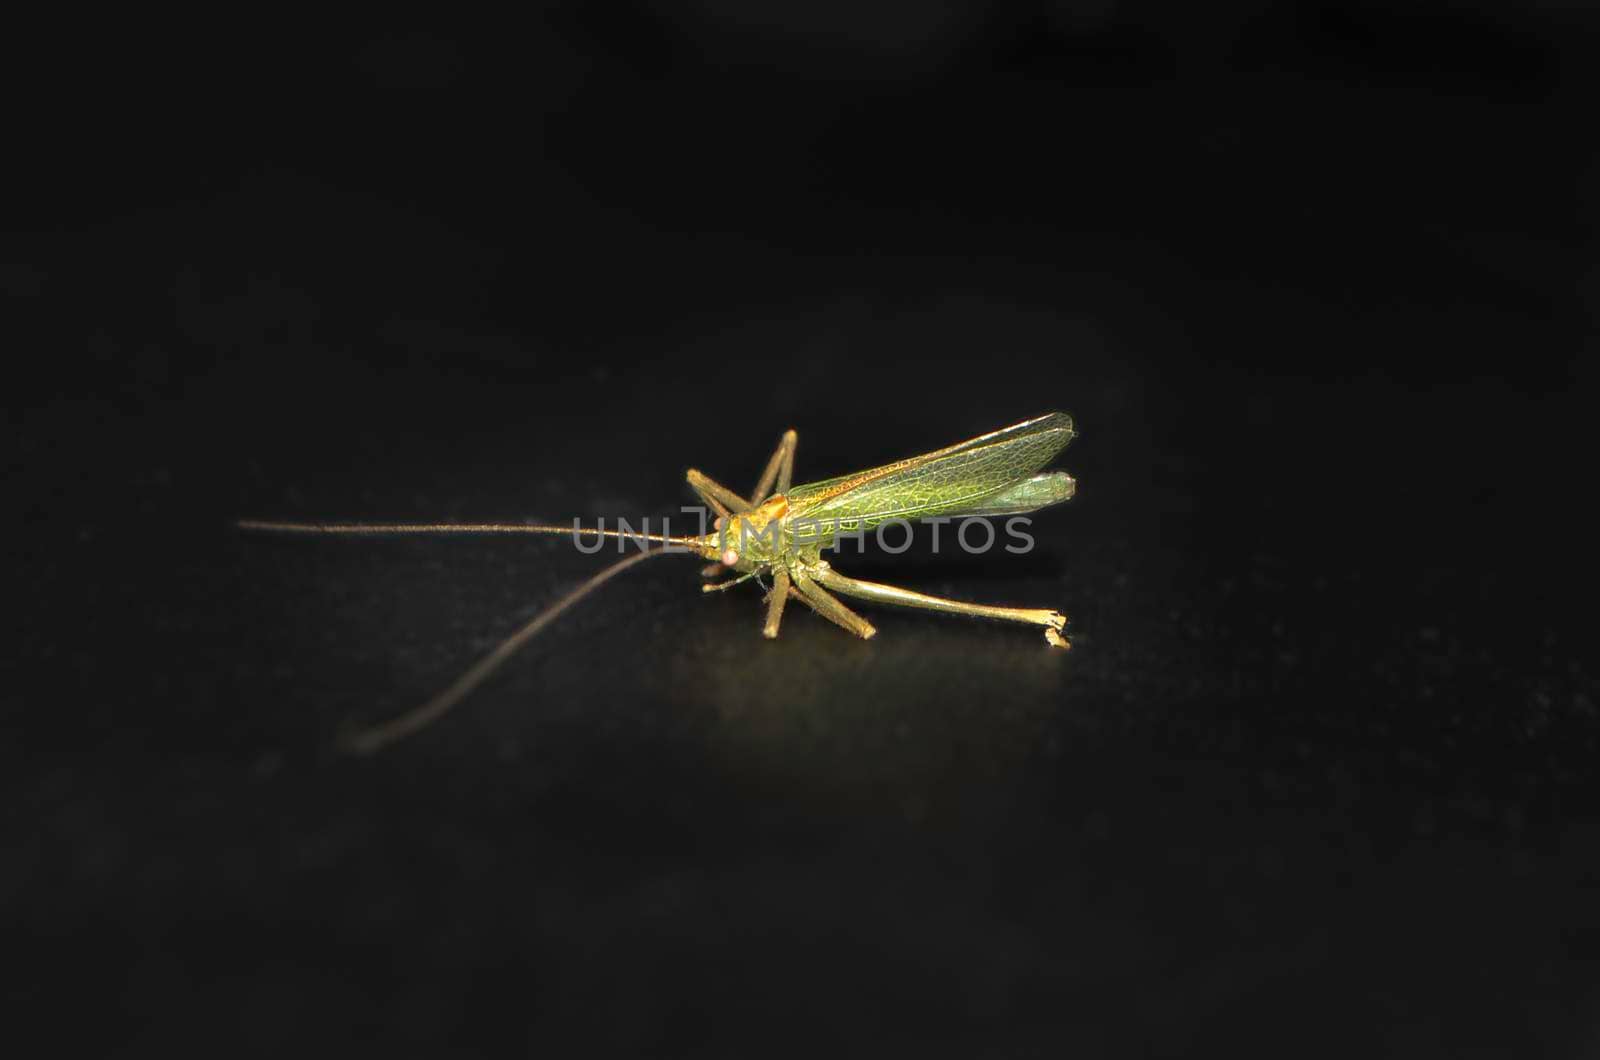 grasshopper macro photography on the black background by milastokerpro